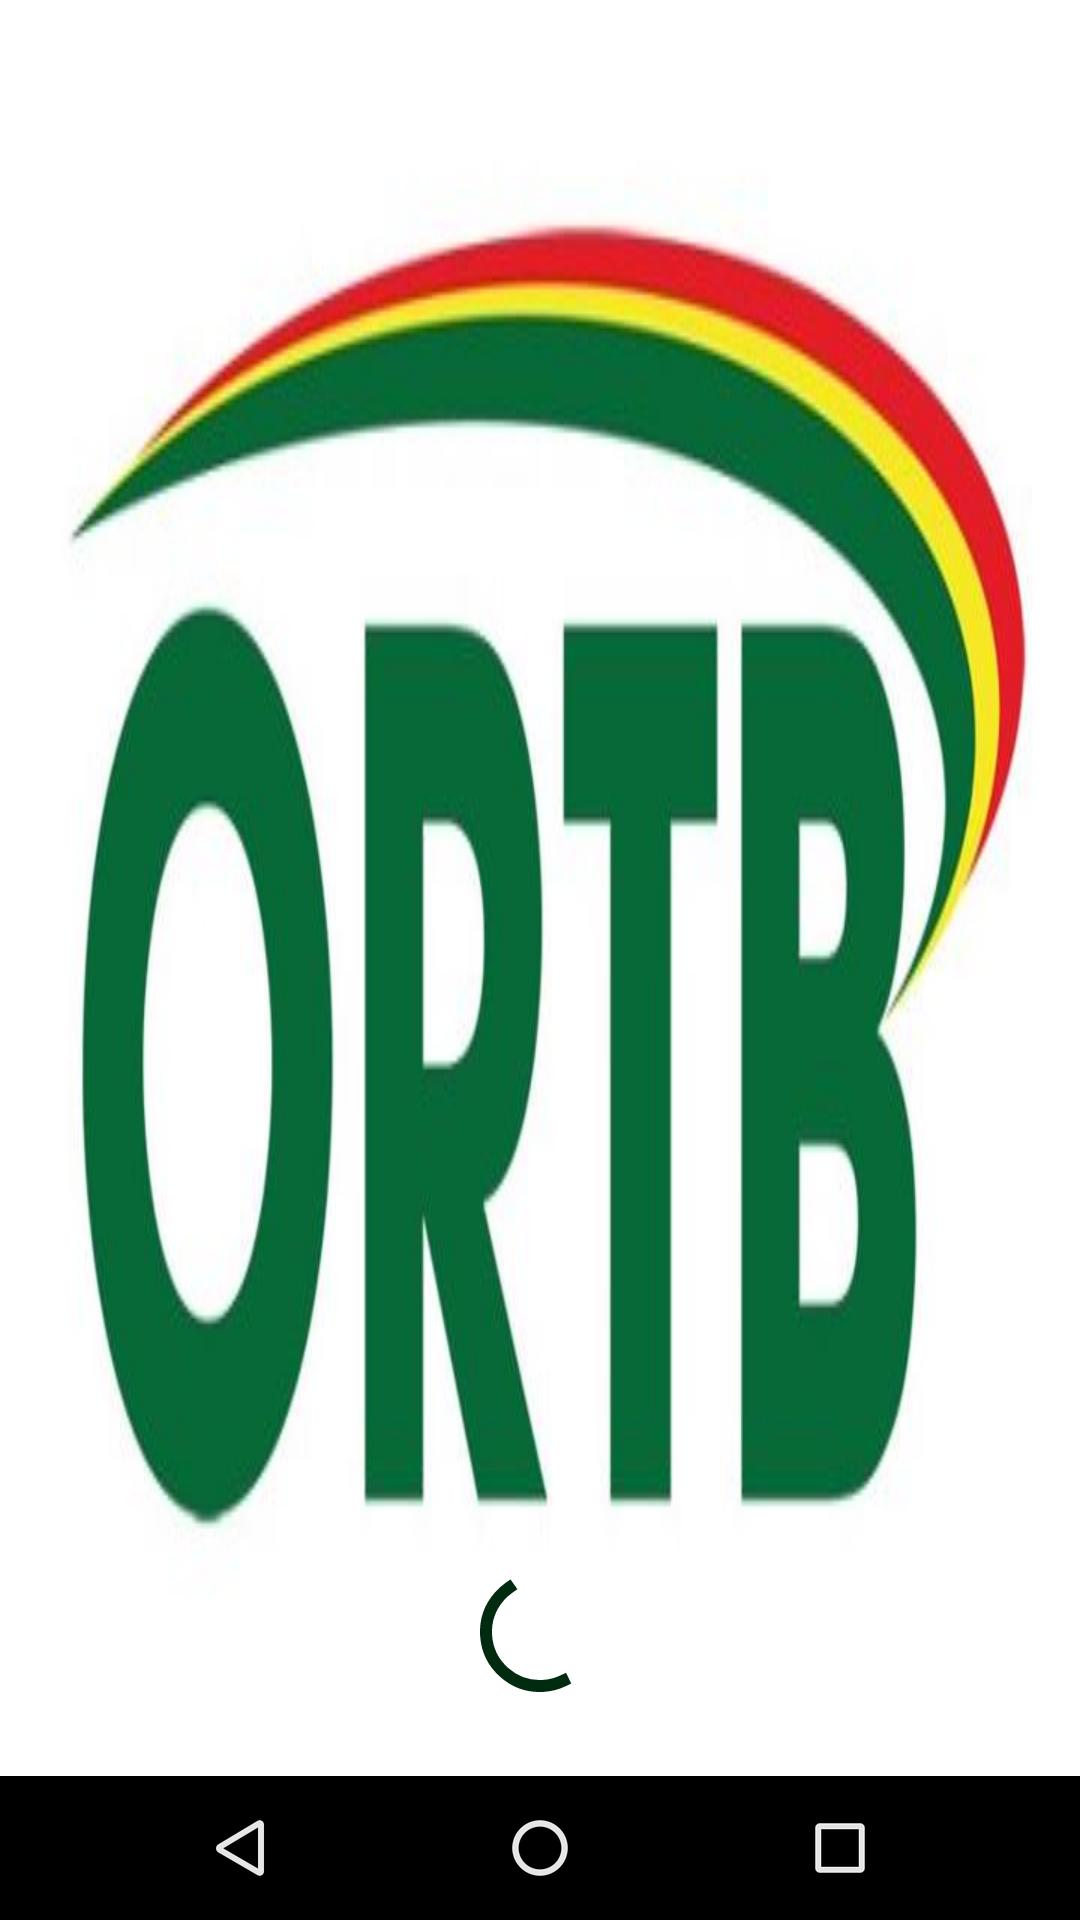 ORTB BENIN | RADIO BENIN for Android - APK Download